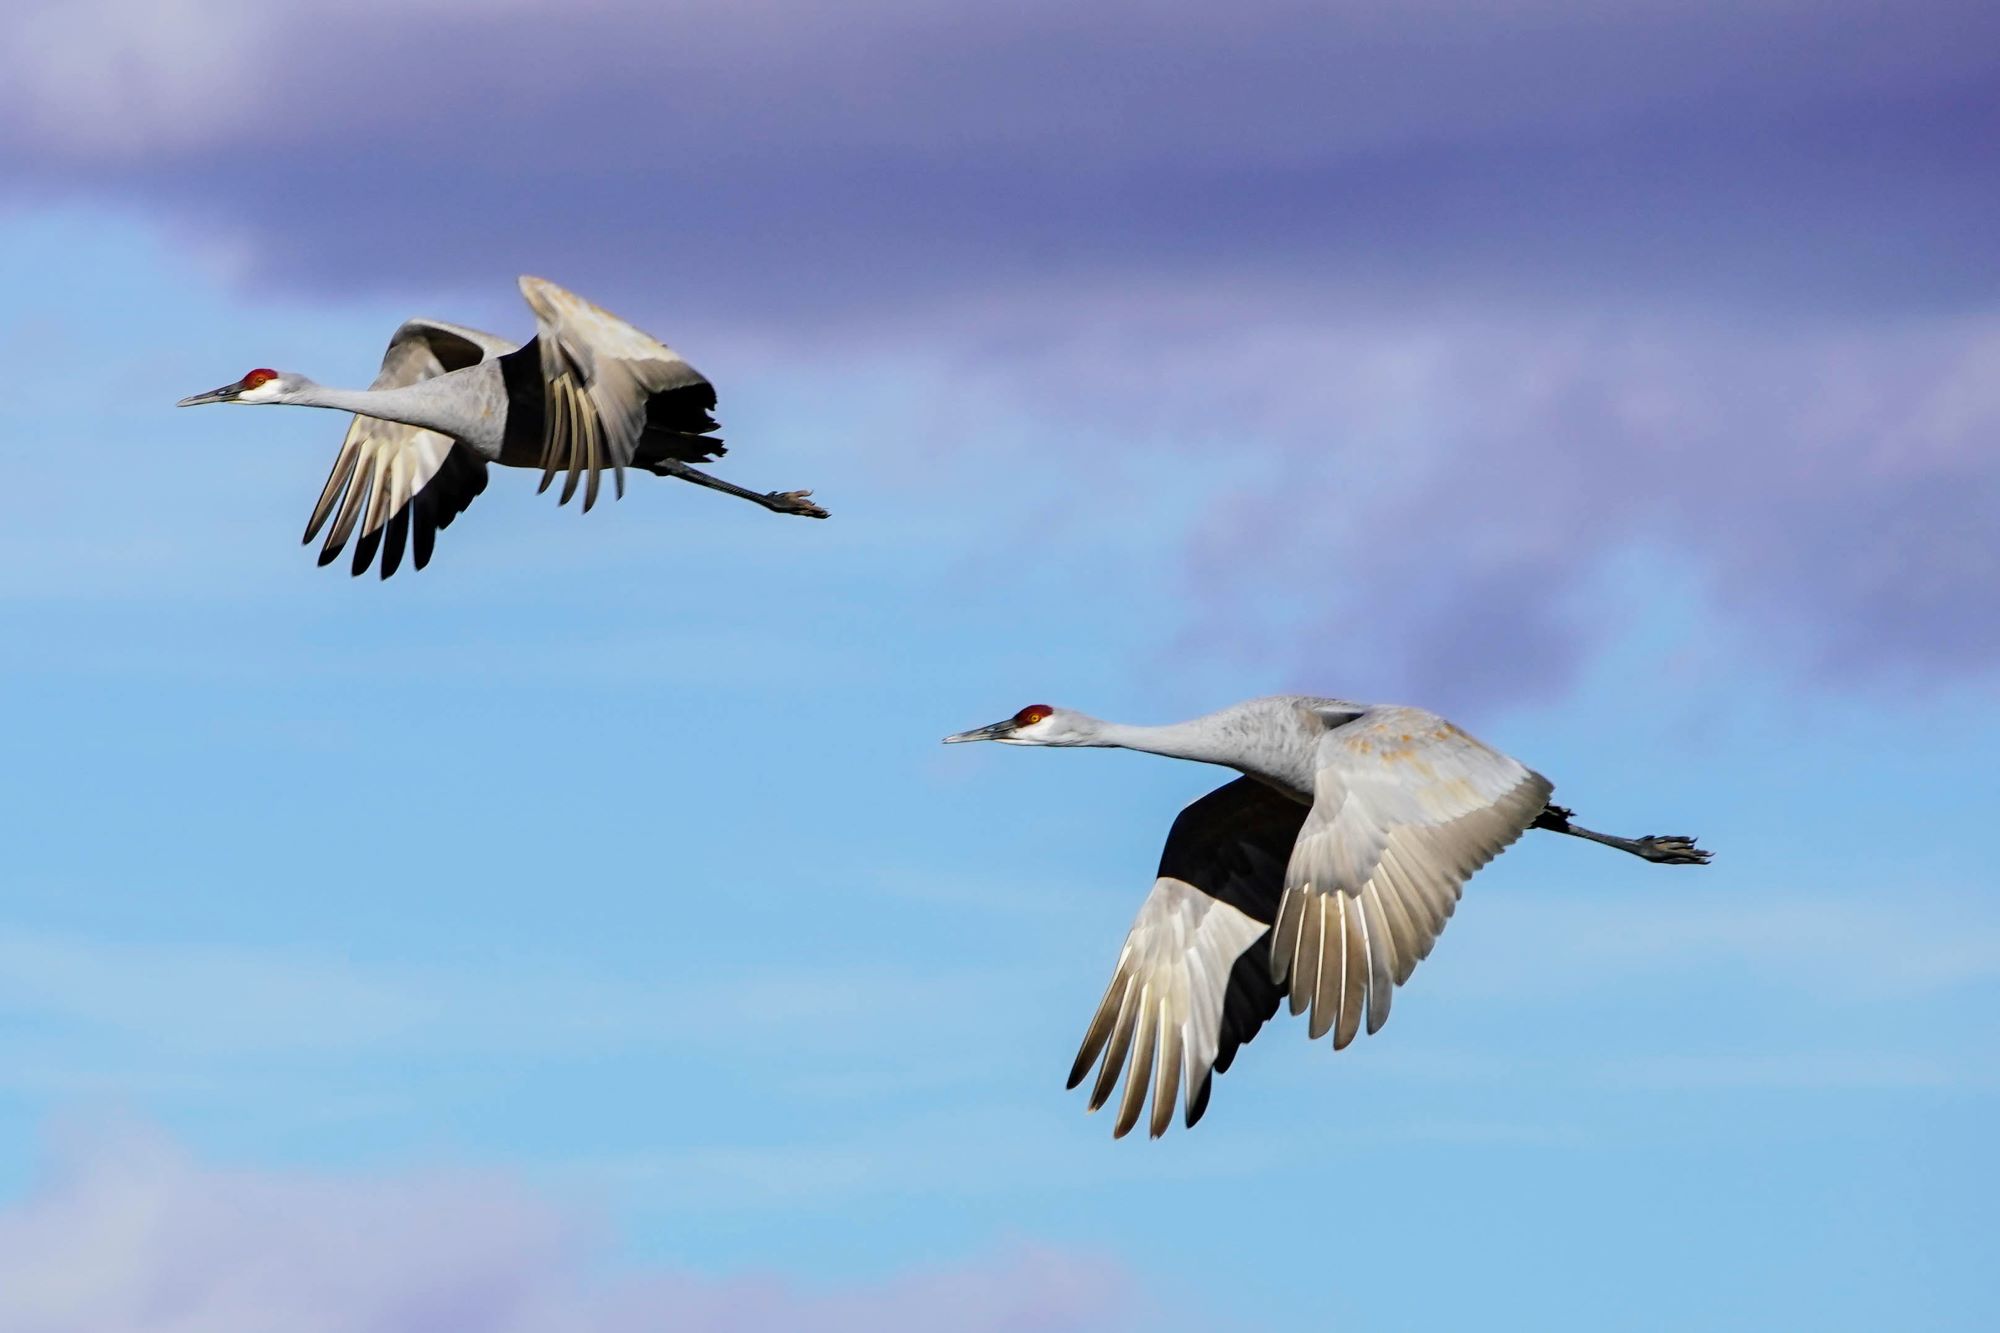 Sandhill cranes flying in formation.